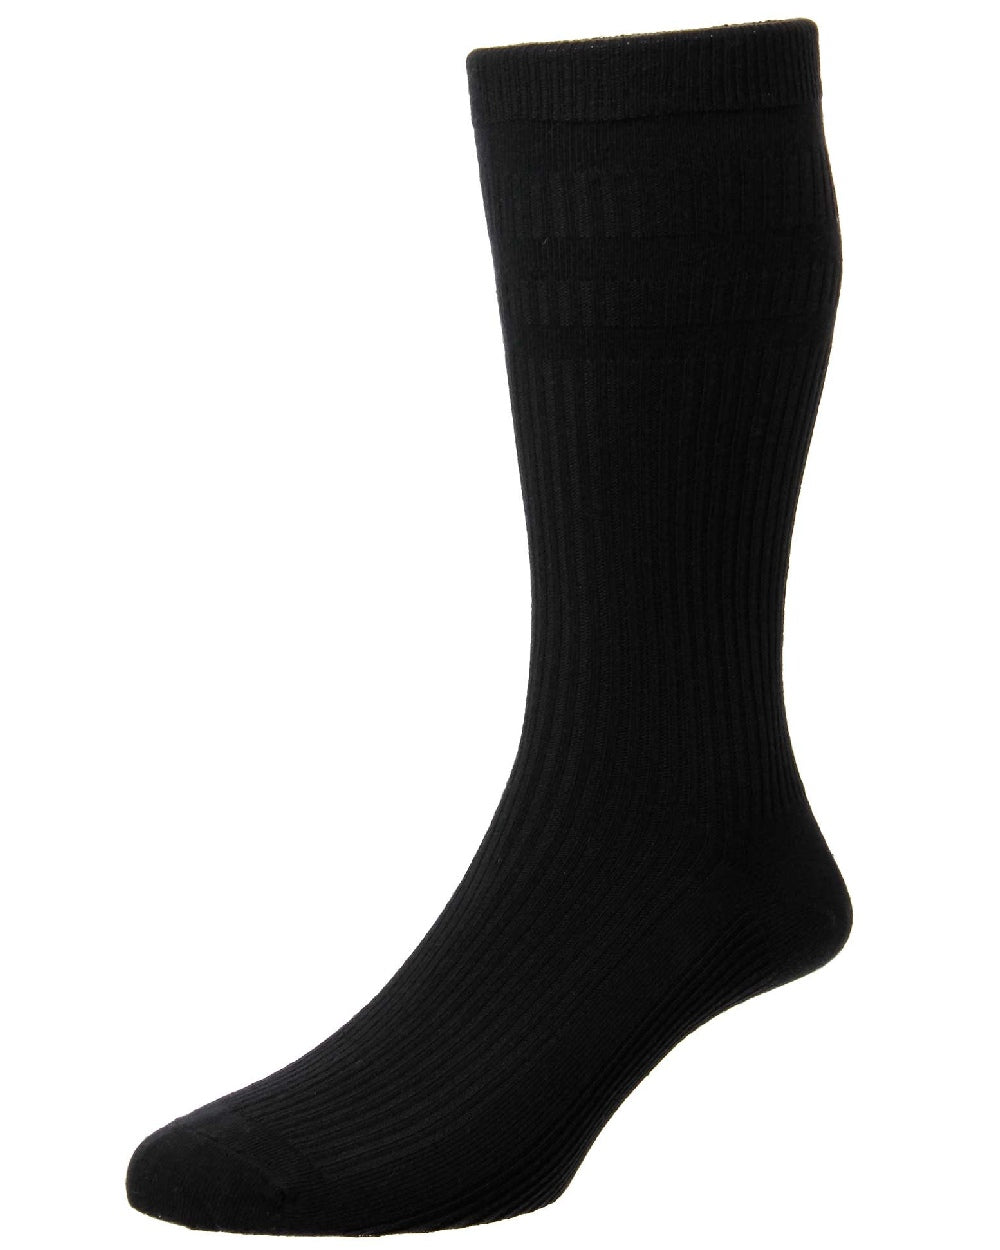 HJ Hall Original Cotton Soft Top Socks in Black 